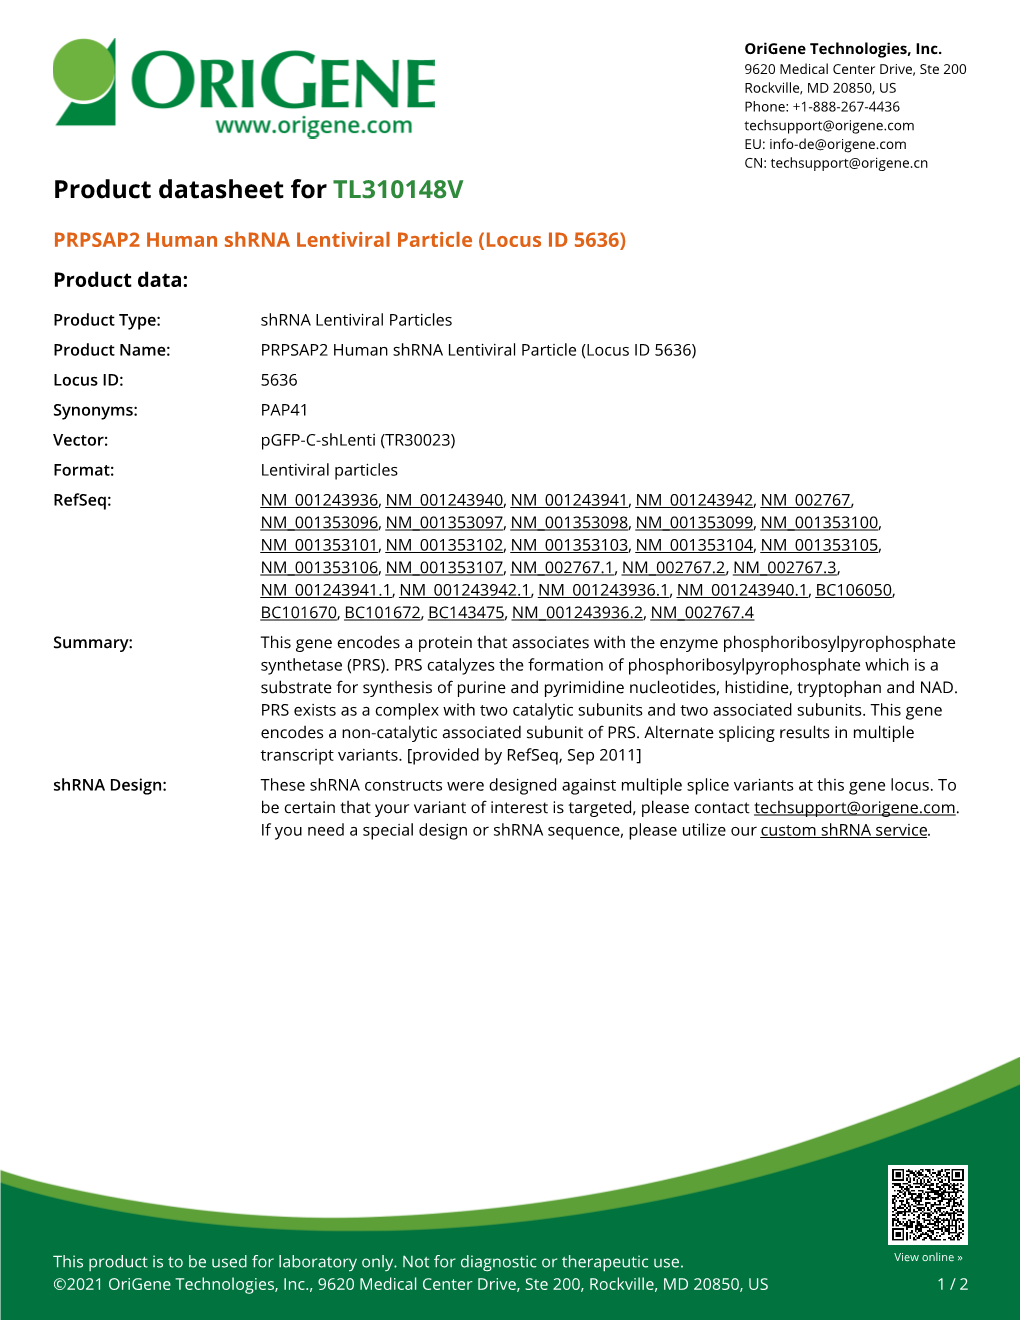 PRPSAP2 Human Shrna Lentiviral Particle (Locus ID 5636) Product Data